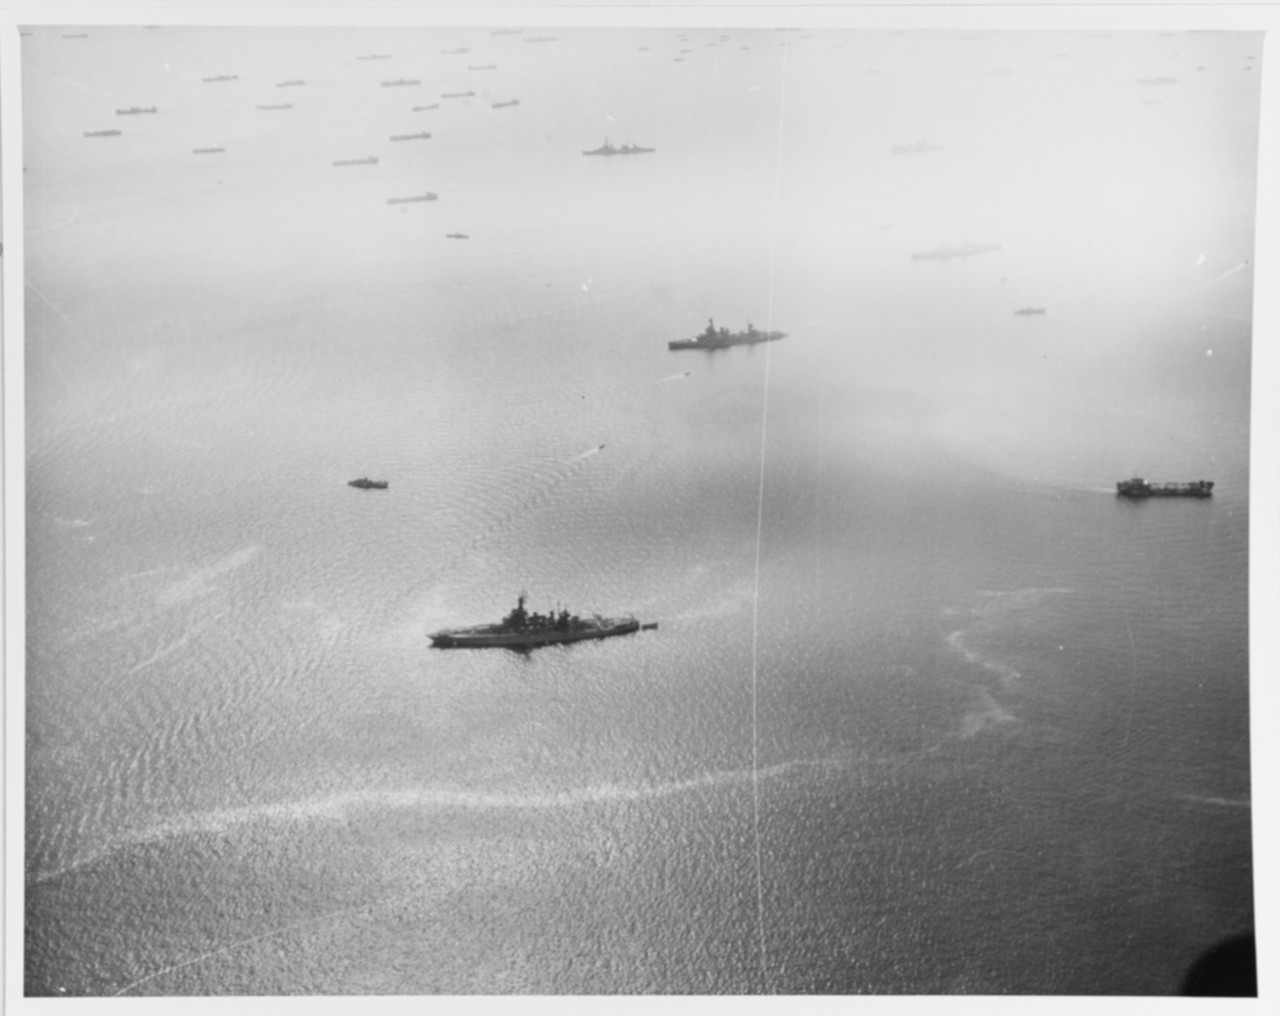 Warships in Leyte Gulf, Philippine Islands